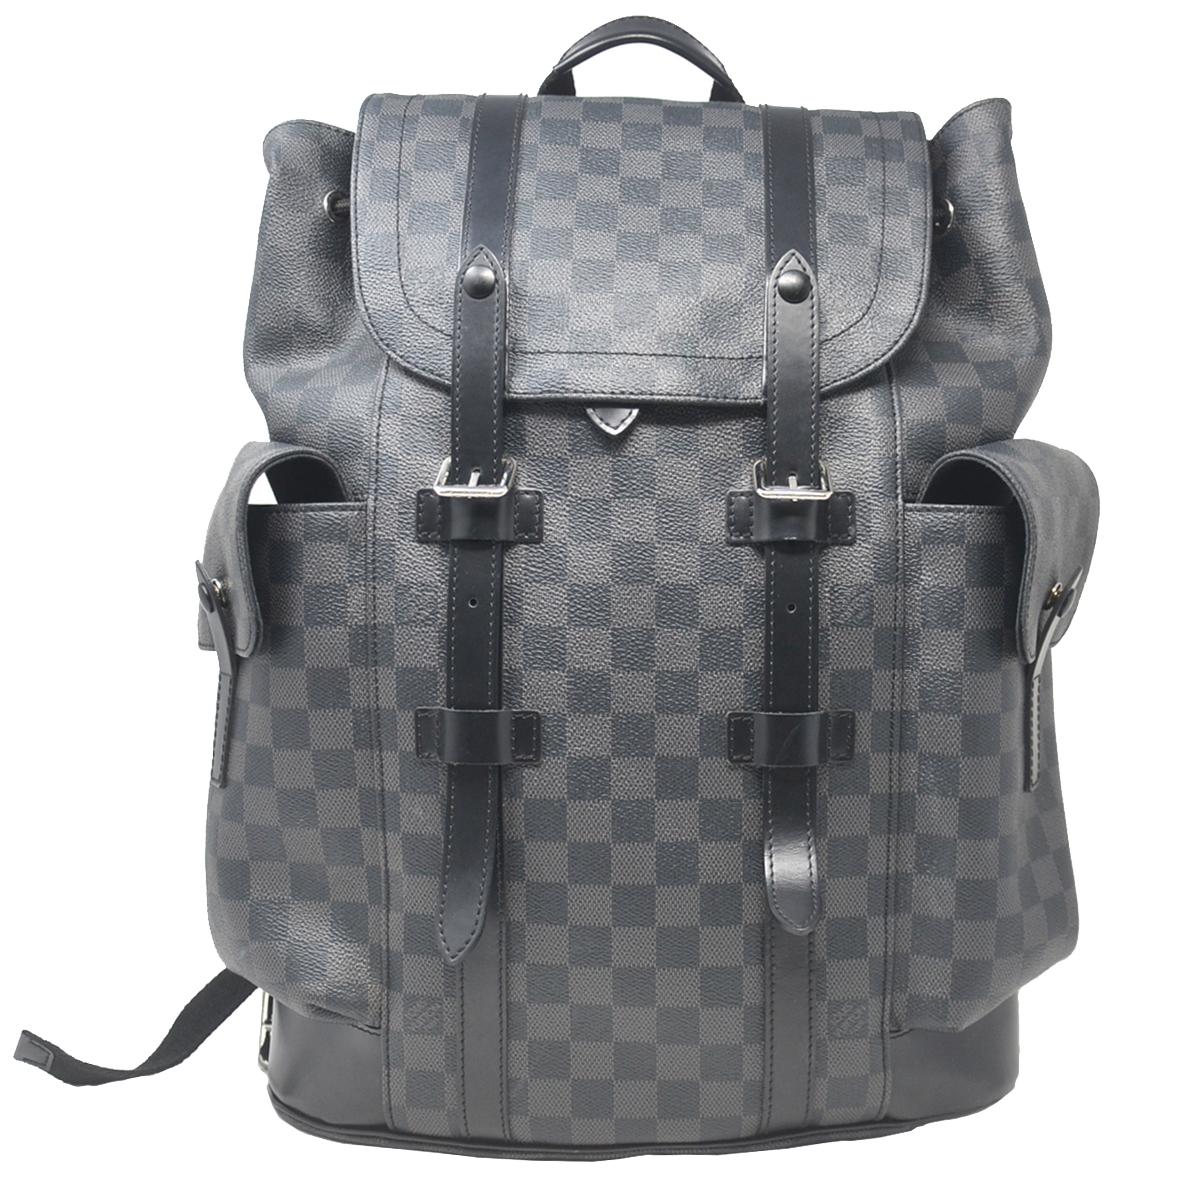 Louis Vuitton N41709 Christopher Pm Backpack Damier Graphite Canvas